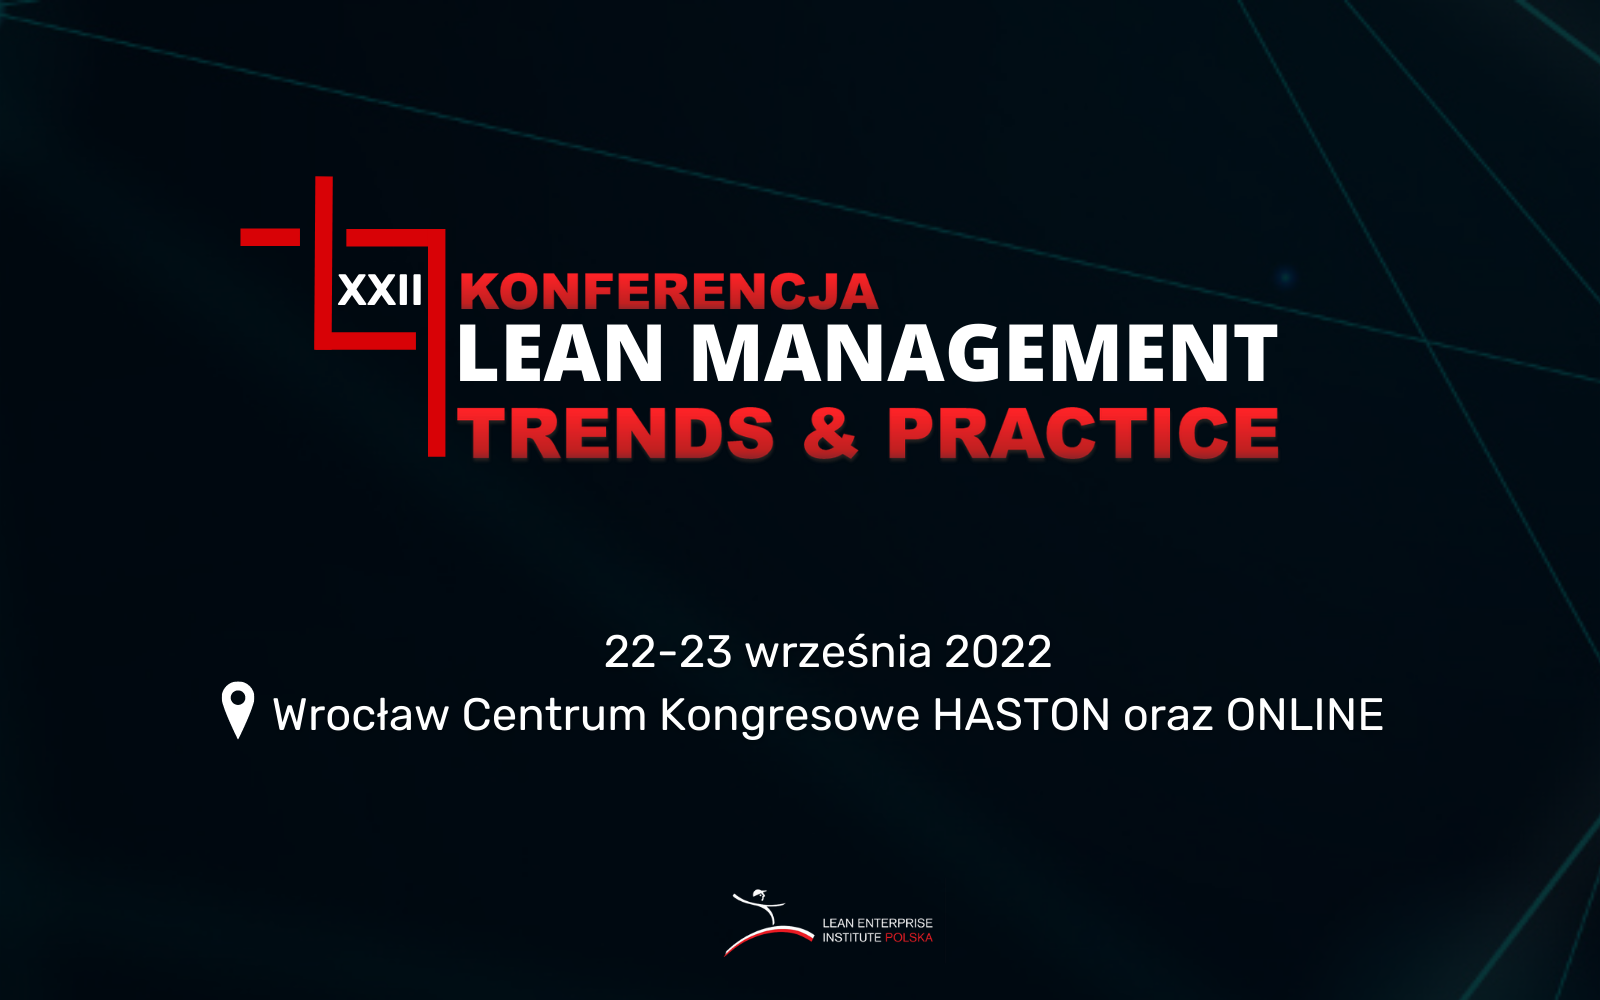 XXII Konferencja Lean Managament Trends & Practice